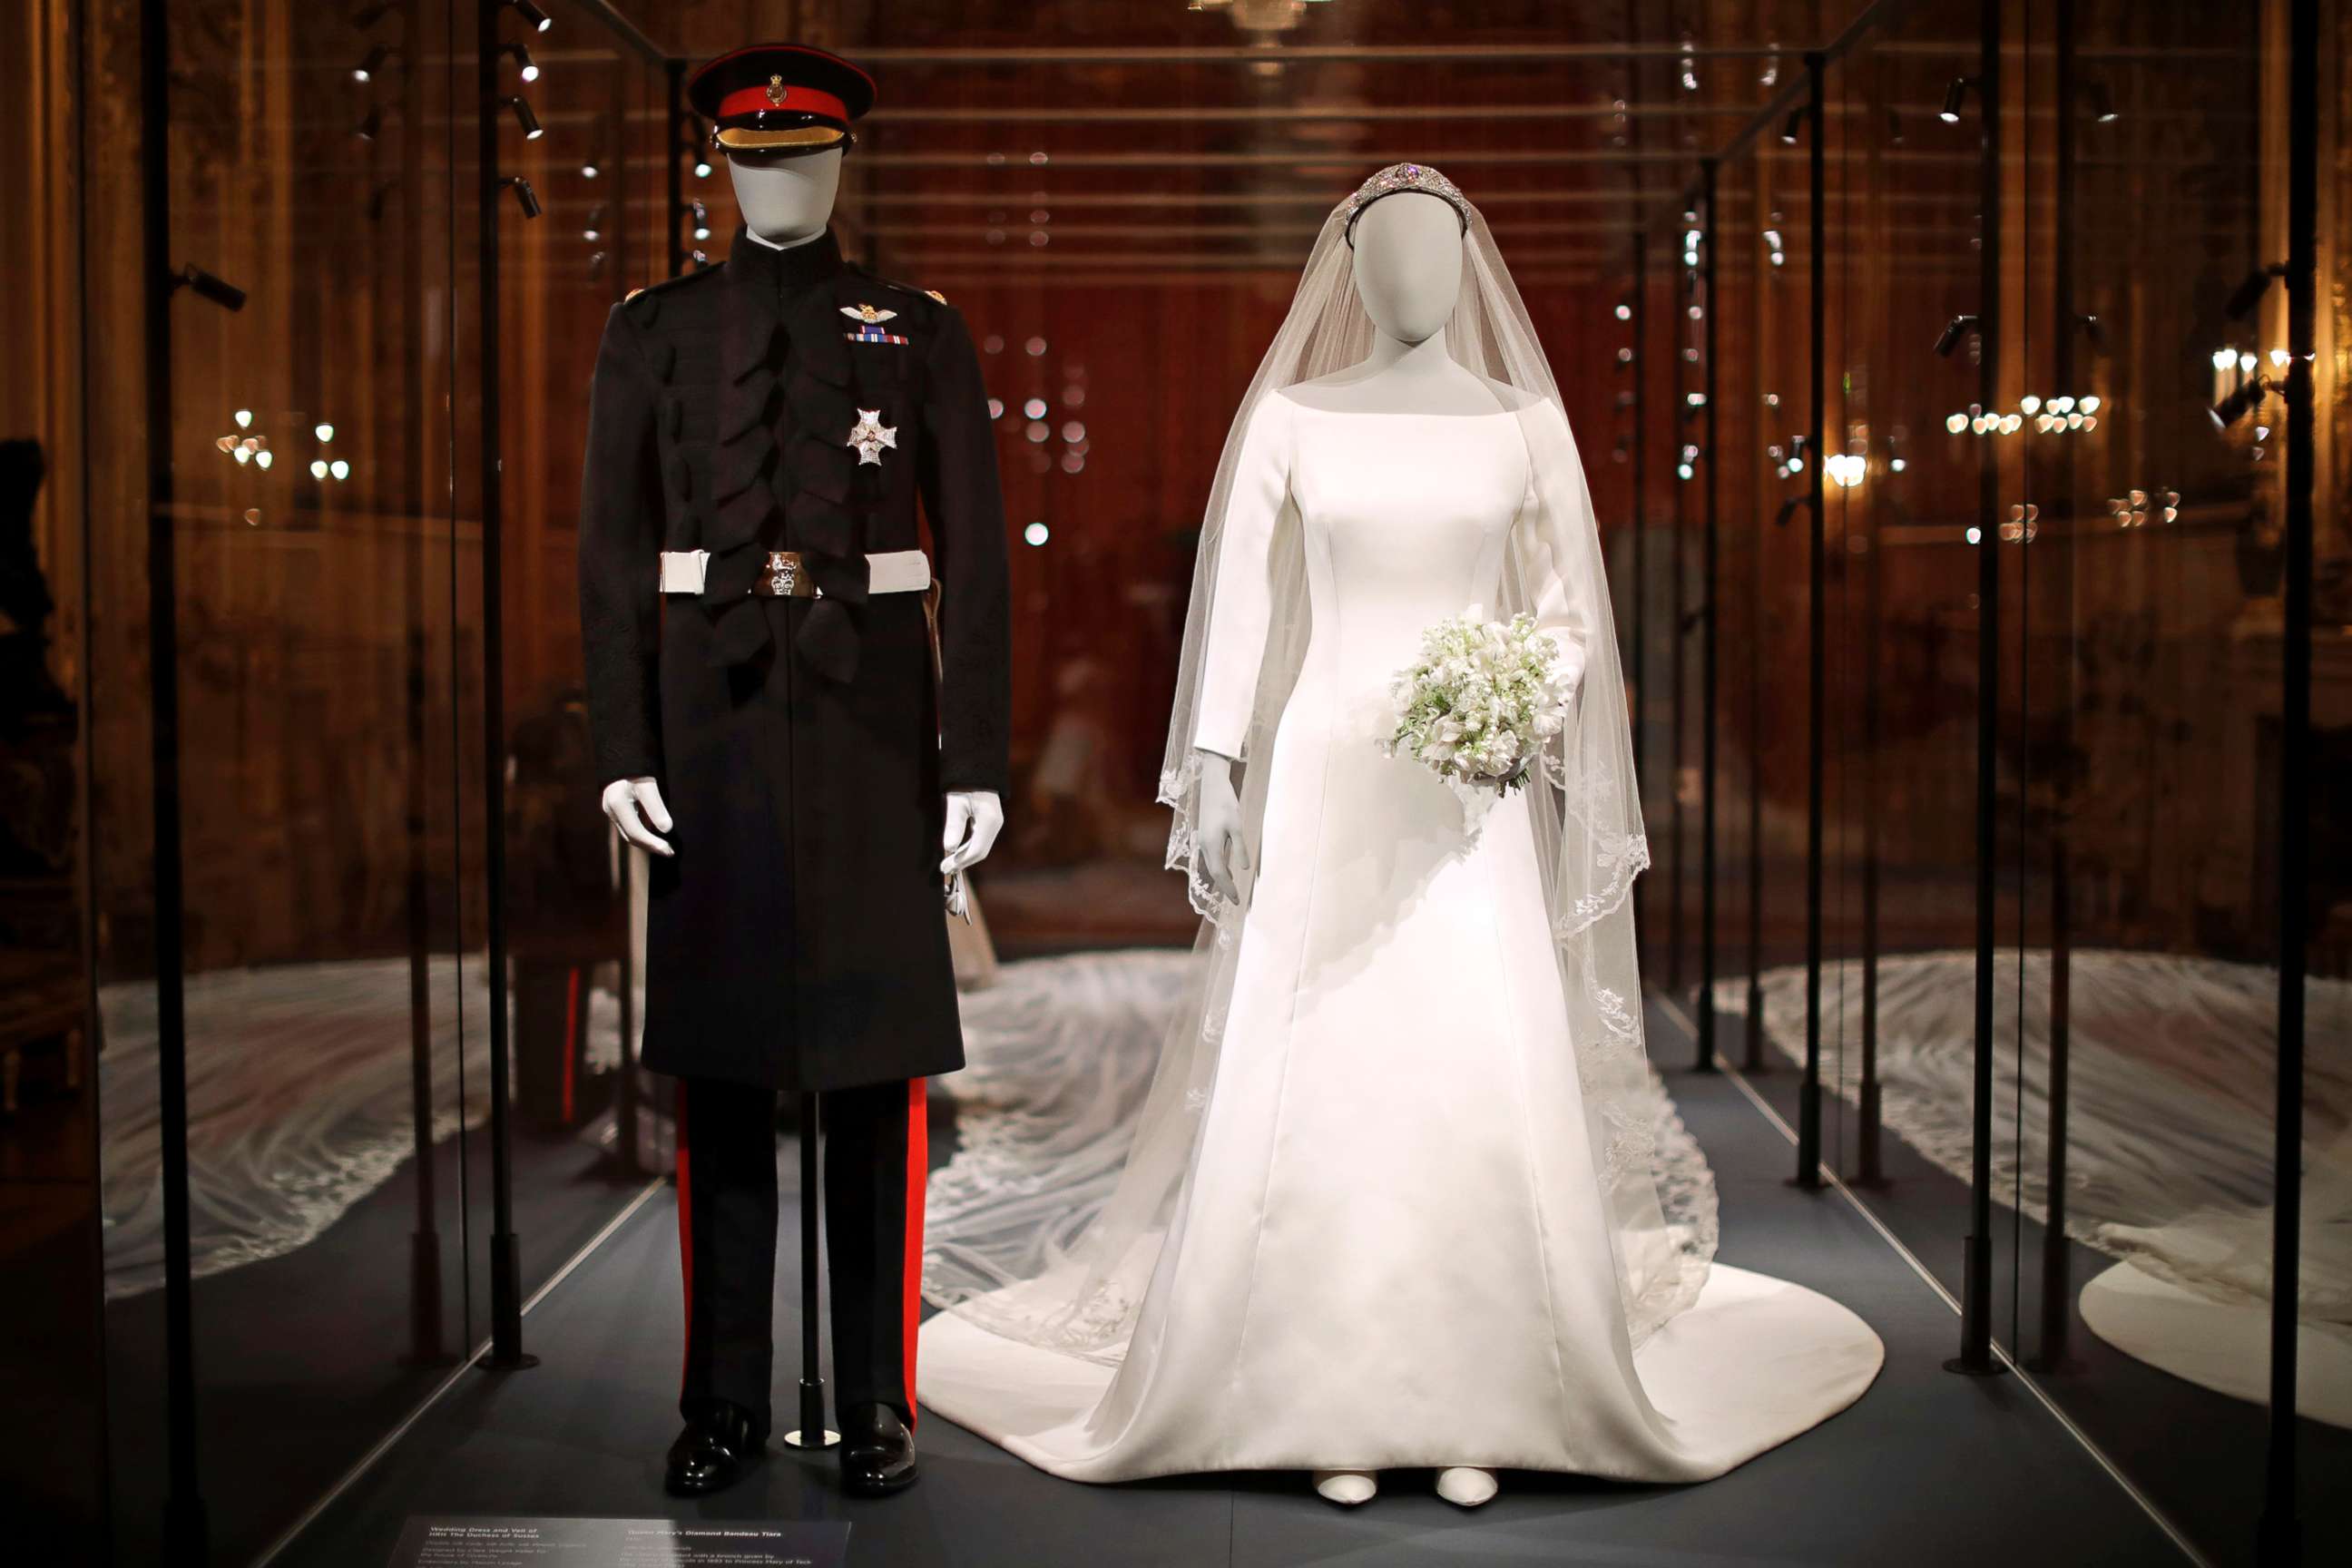 Why Meghan Markle's Wedding Dress Was a Powerful Statement